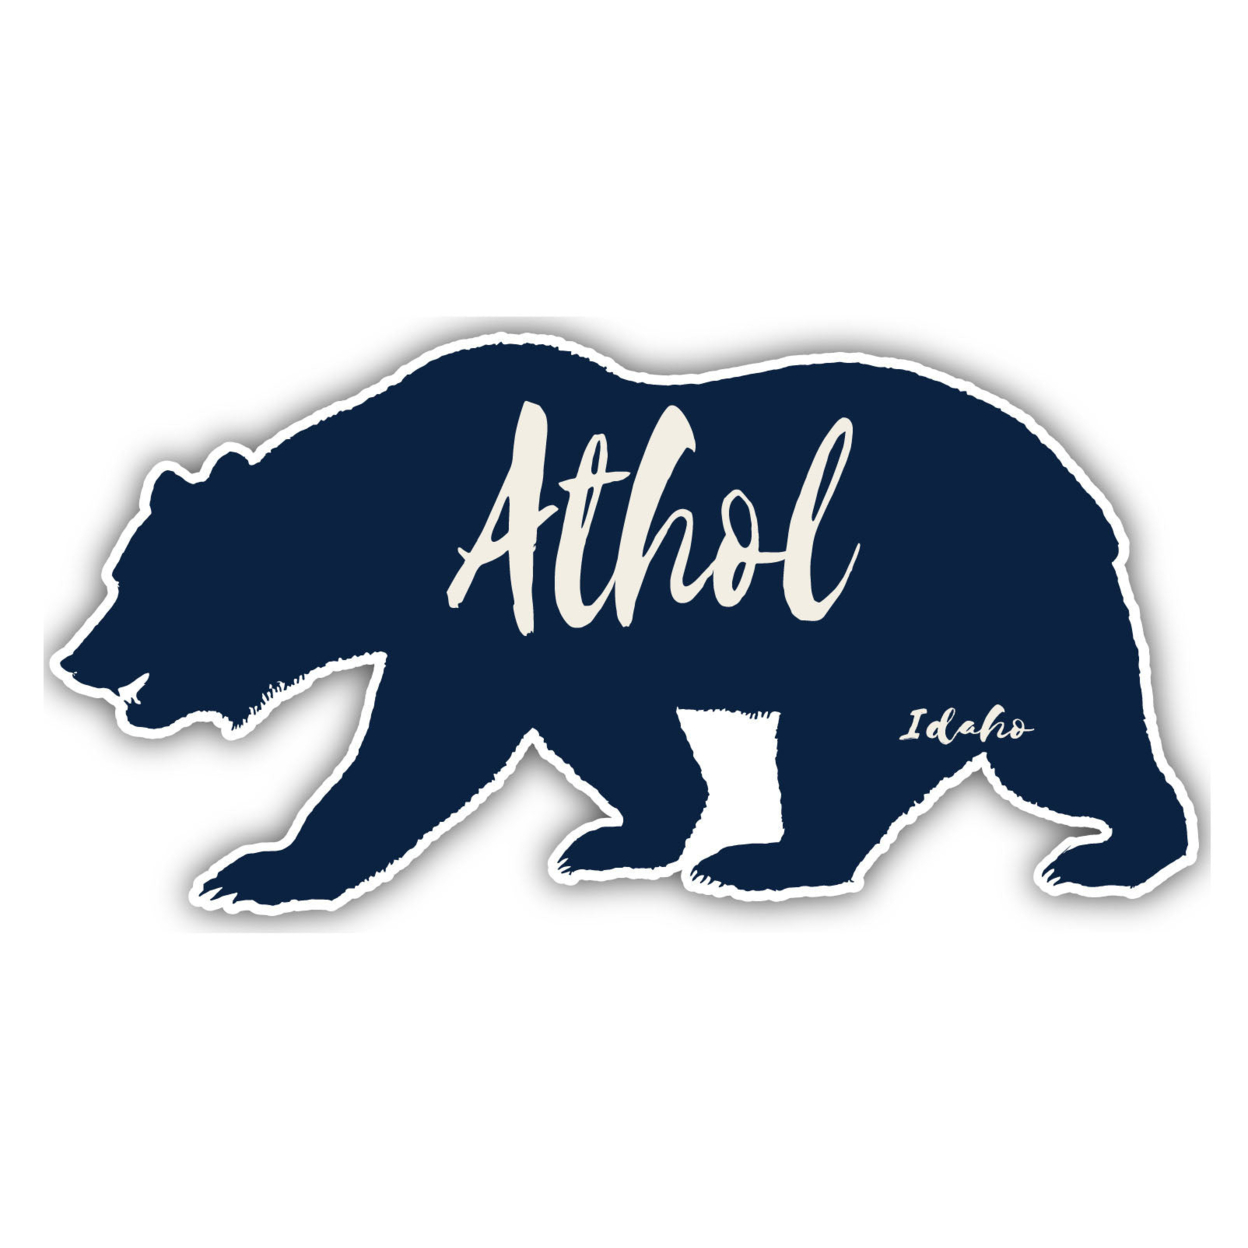 Athol Idaho Souvenir Decorative Stickers (Choose Theme And Size) - Single Unit, 10-Inch, Bear